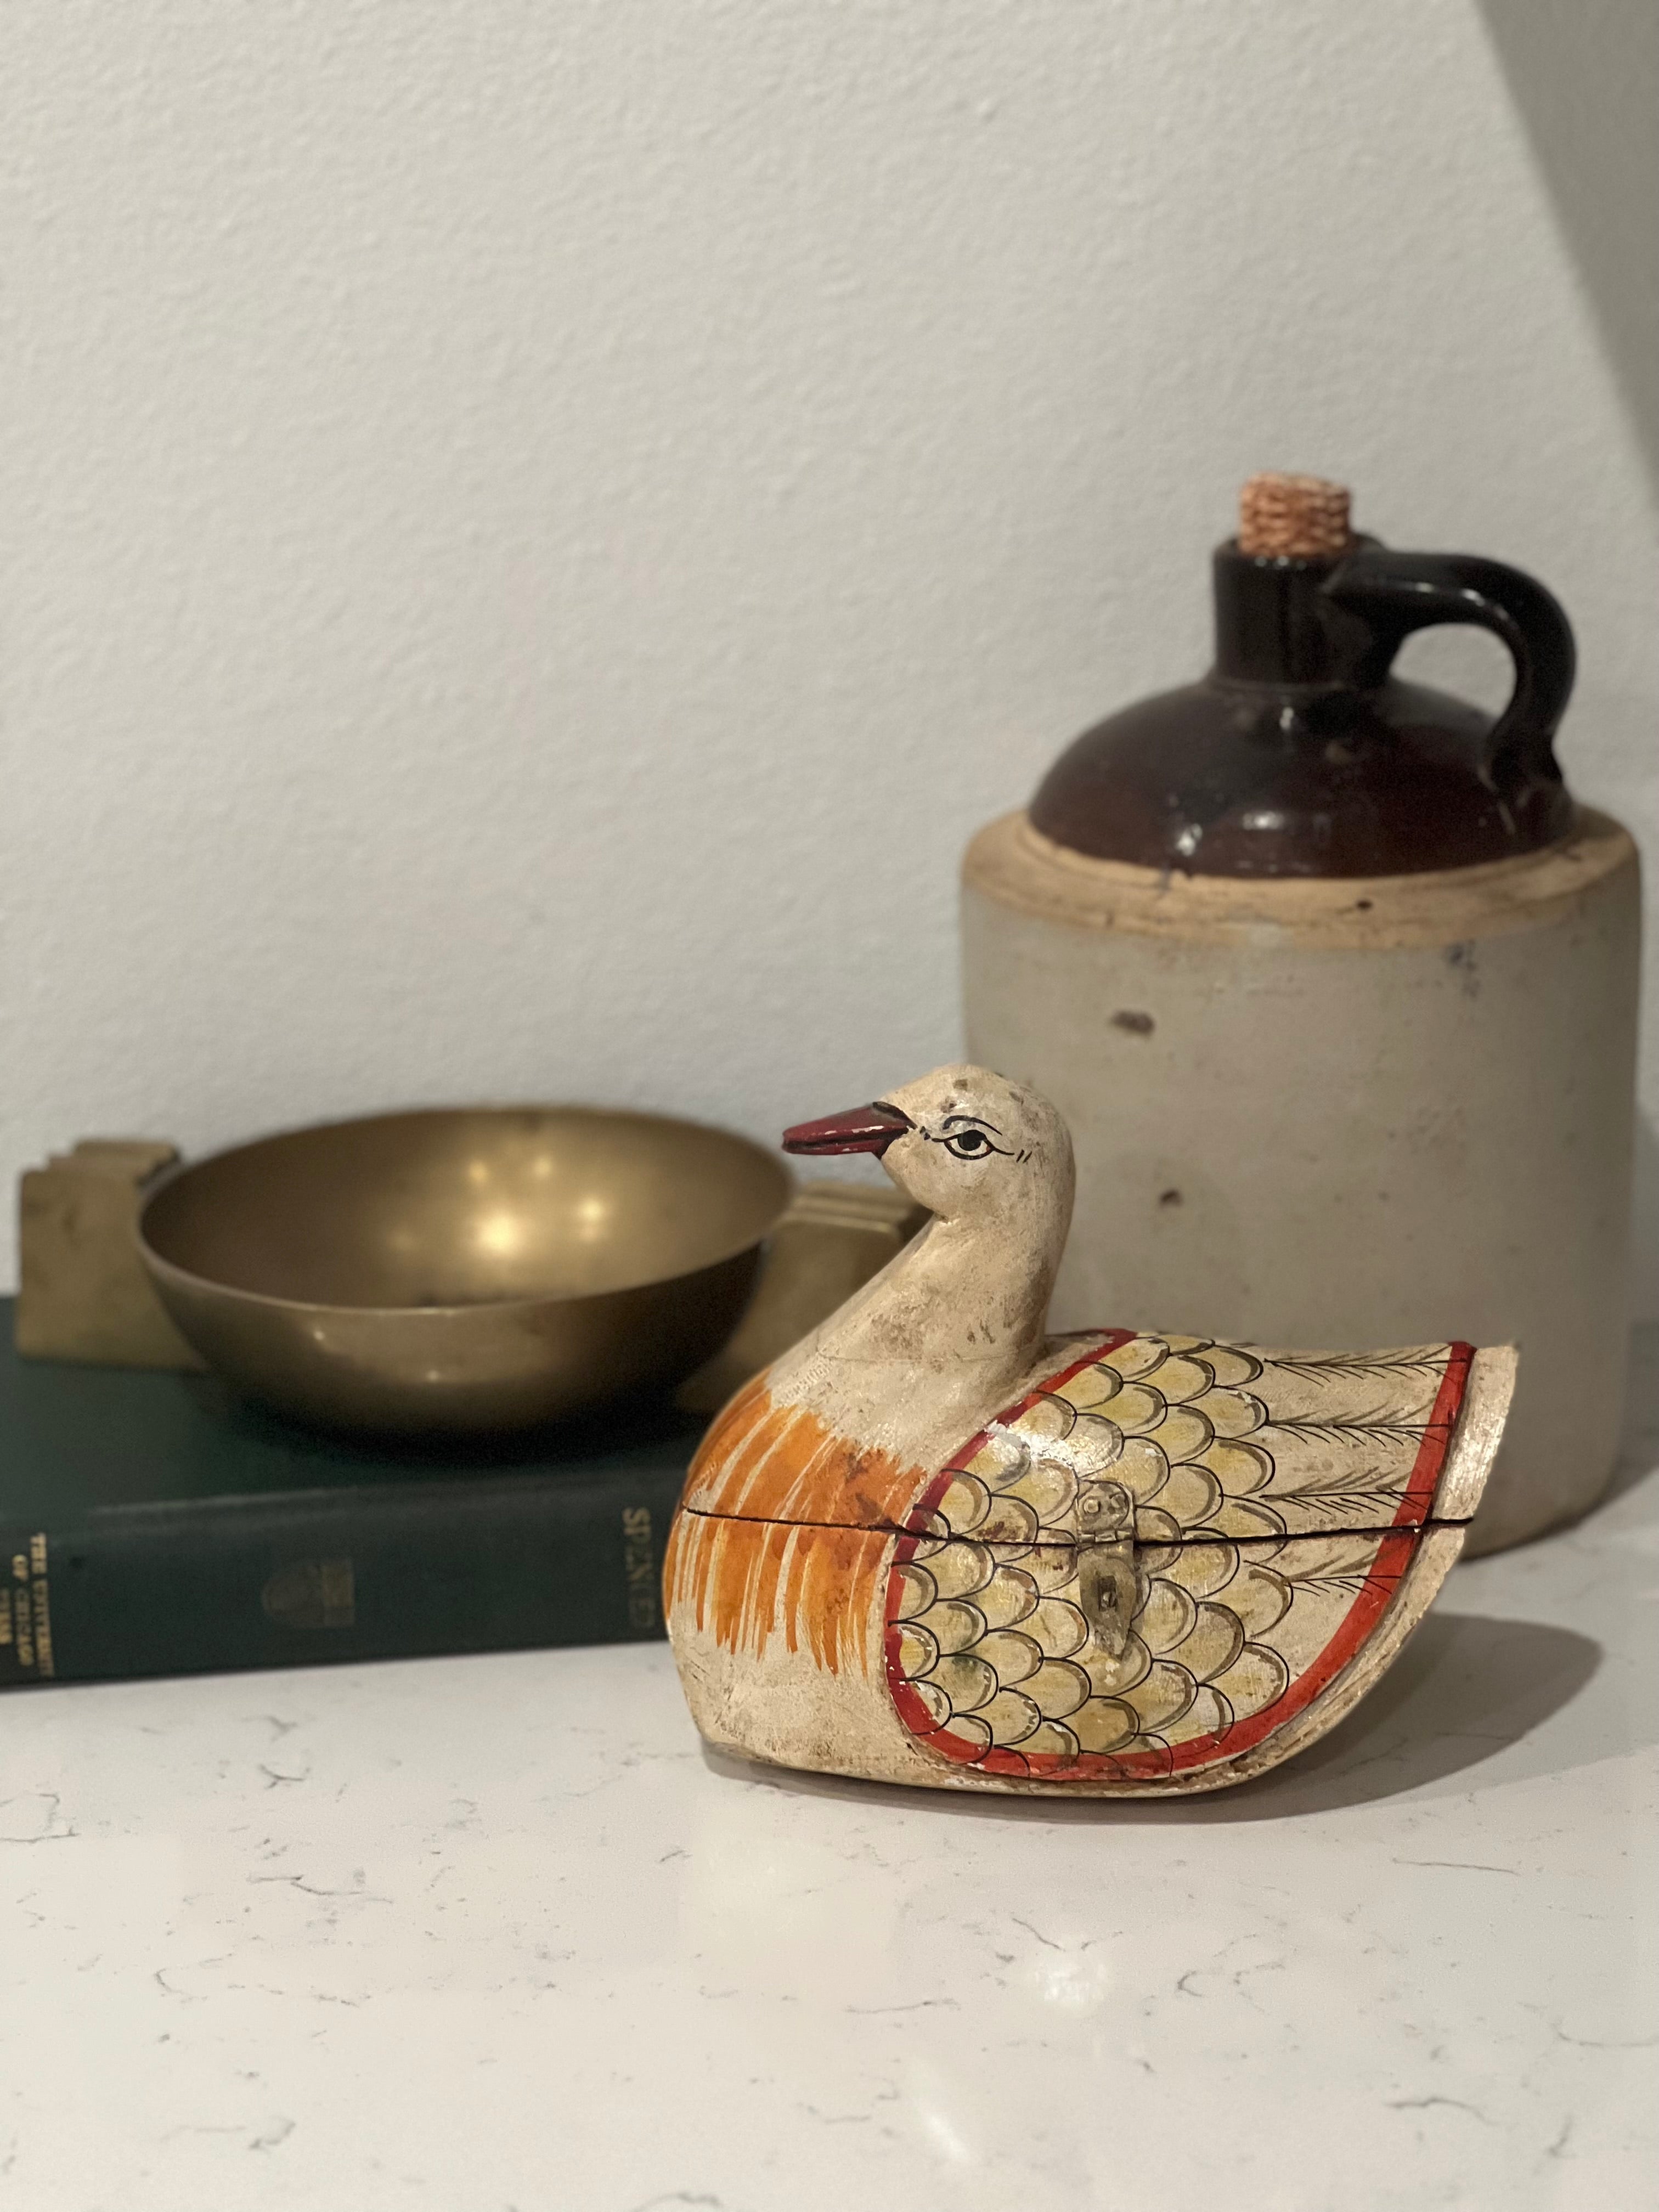 Vintage Wooden Ducks